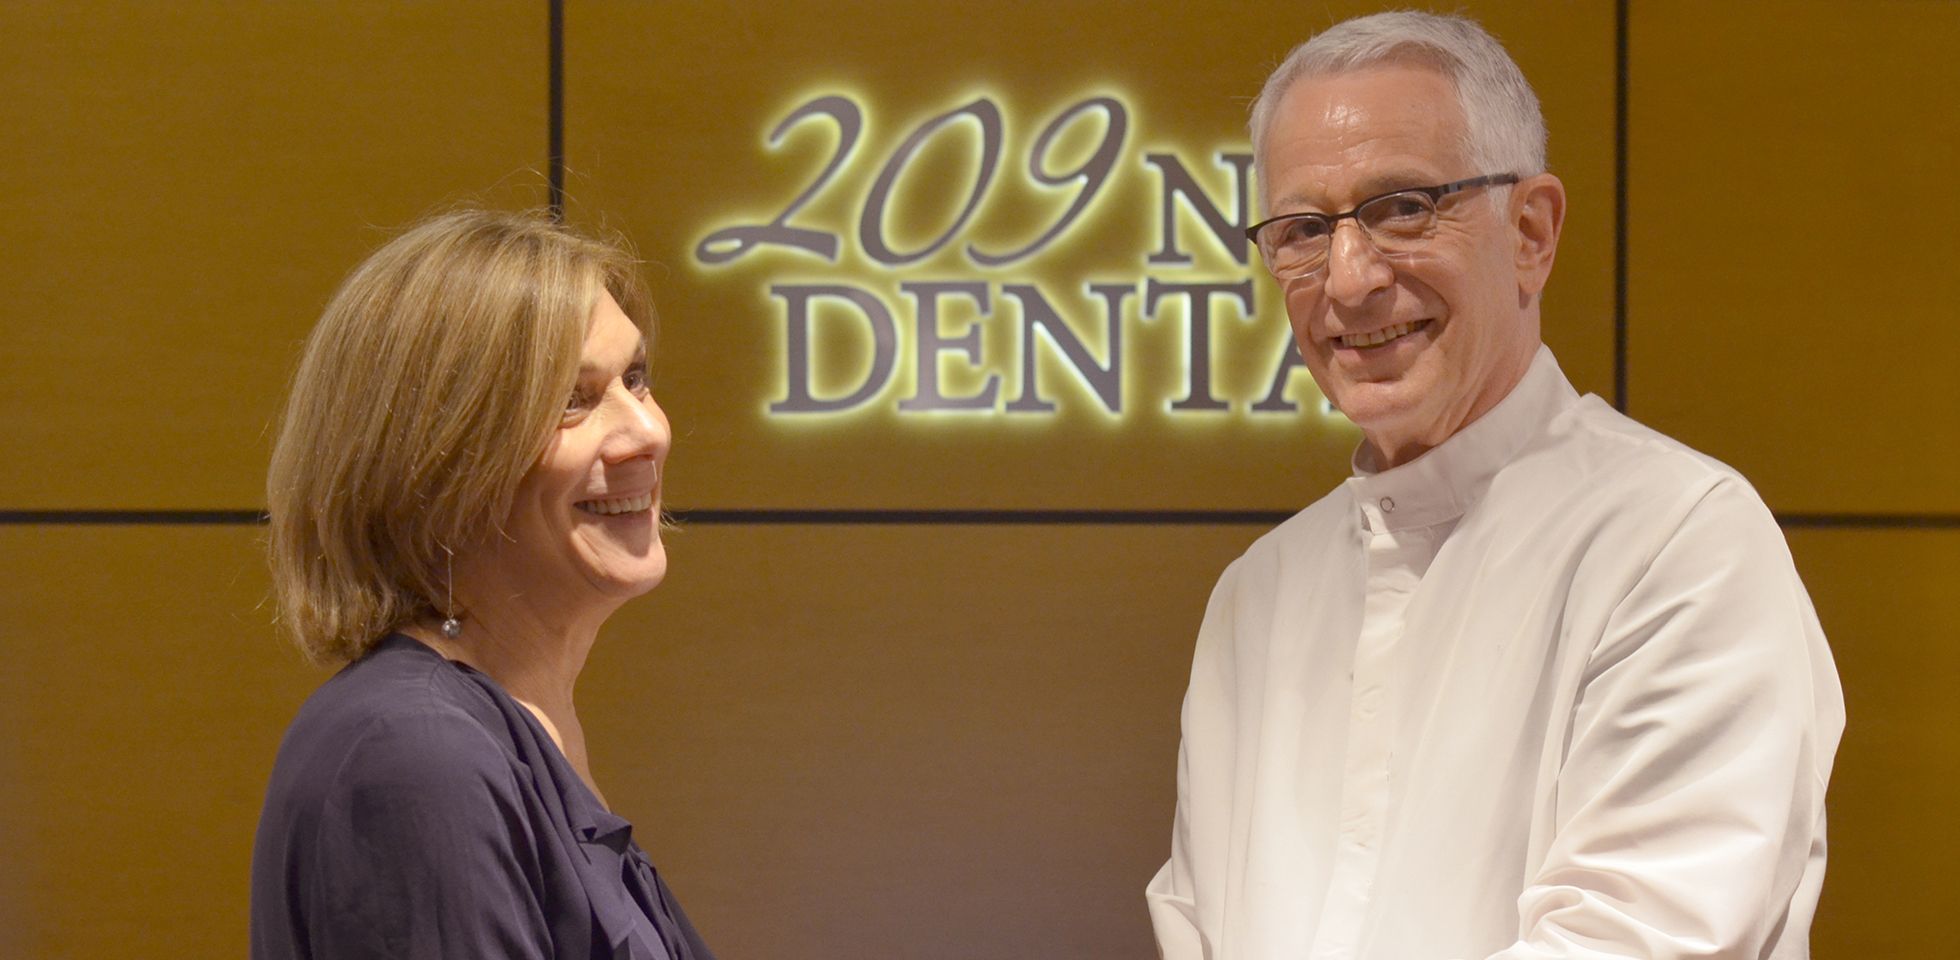 209 NYC Dental consultation